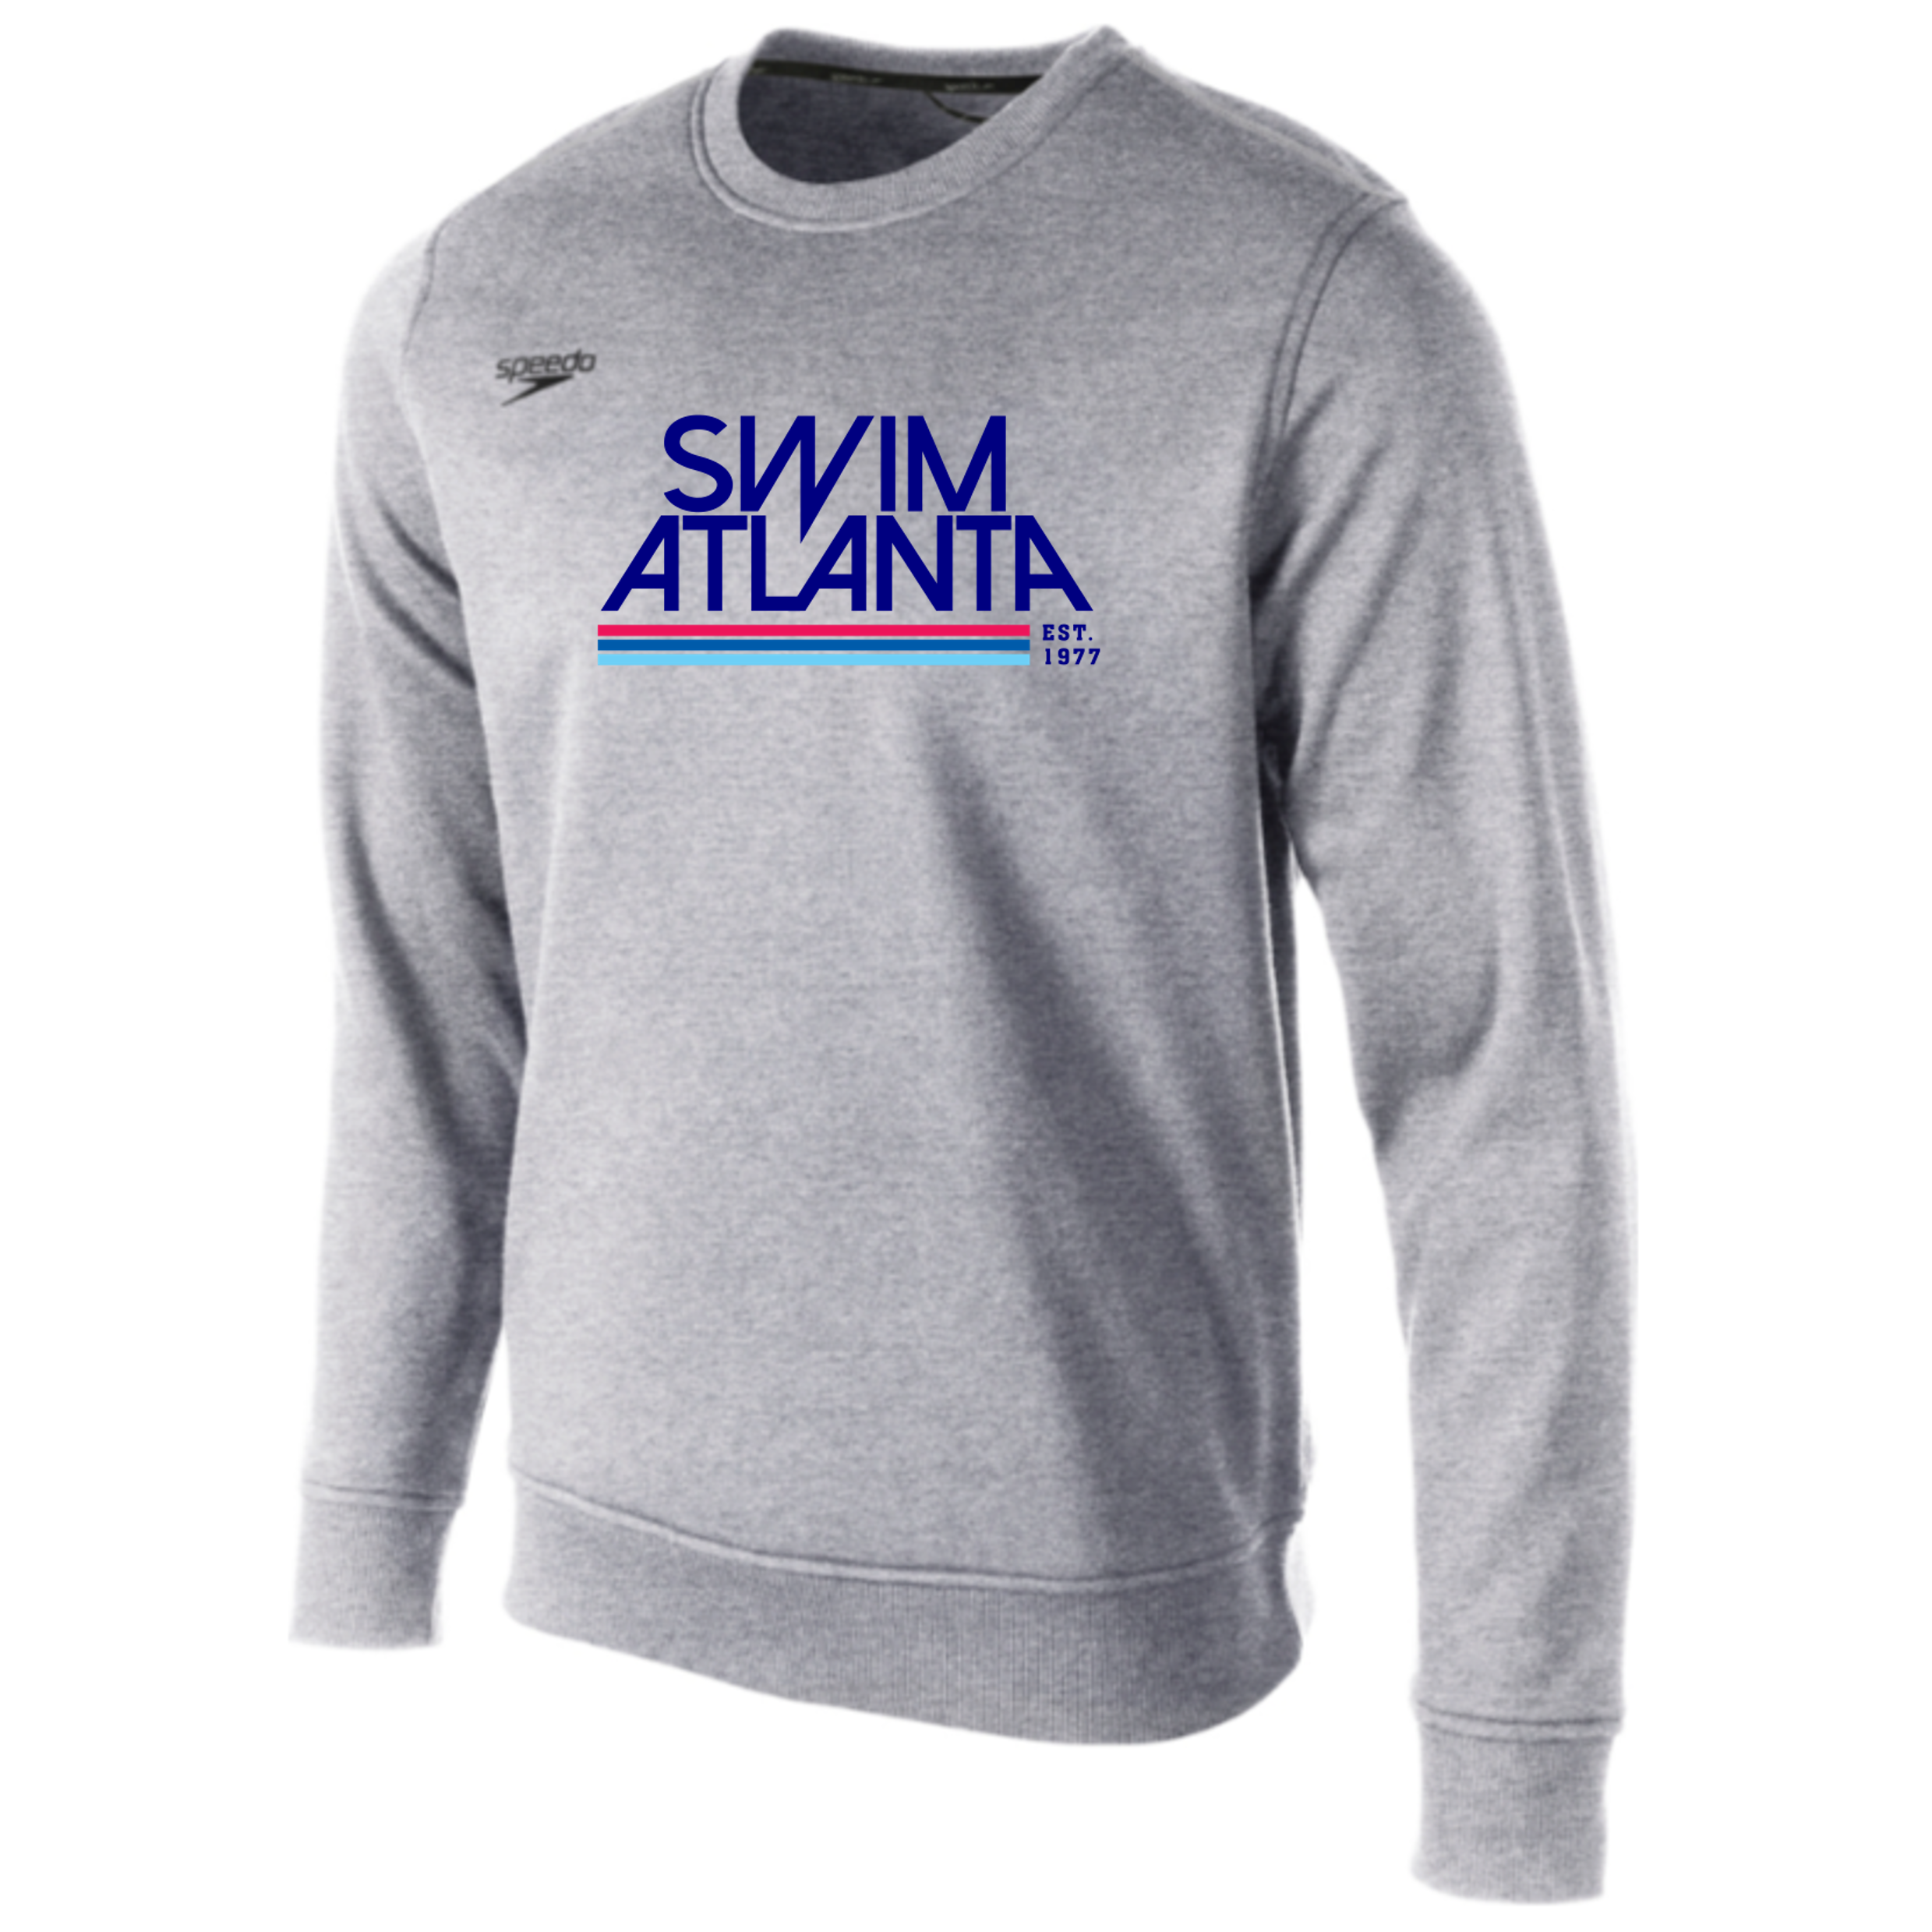 Speedo Fleece Crew Neck Sweatshirt #2 - Swim Atlanta